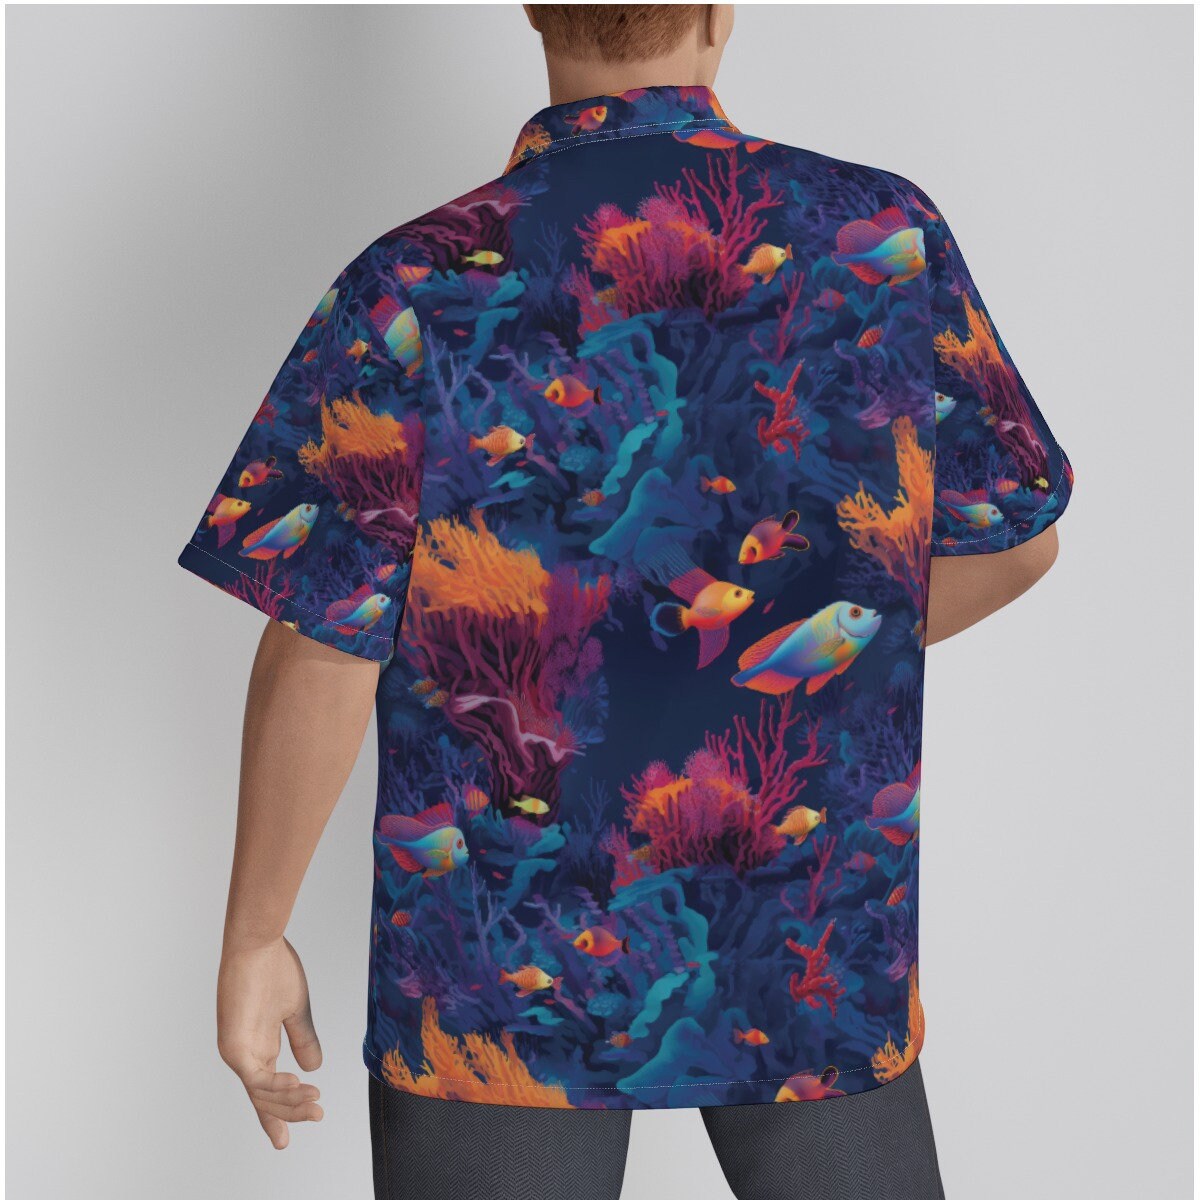 The Blue Tropical Ocean Men's Hawaiian Shirt